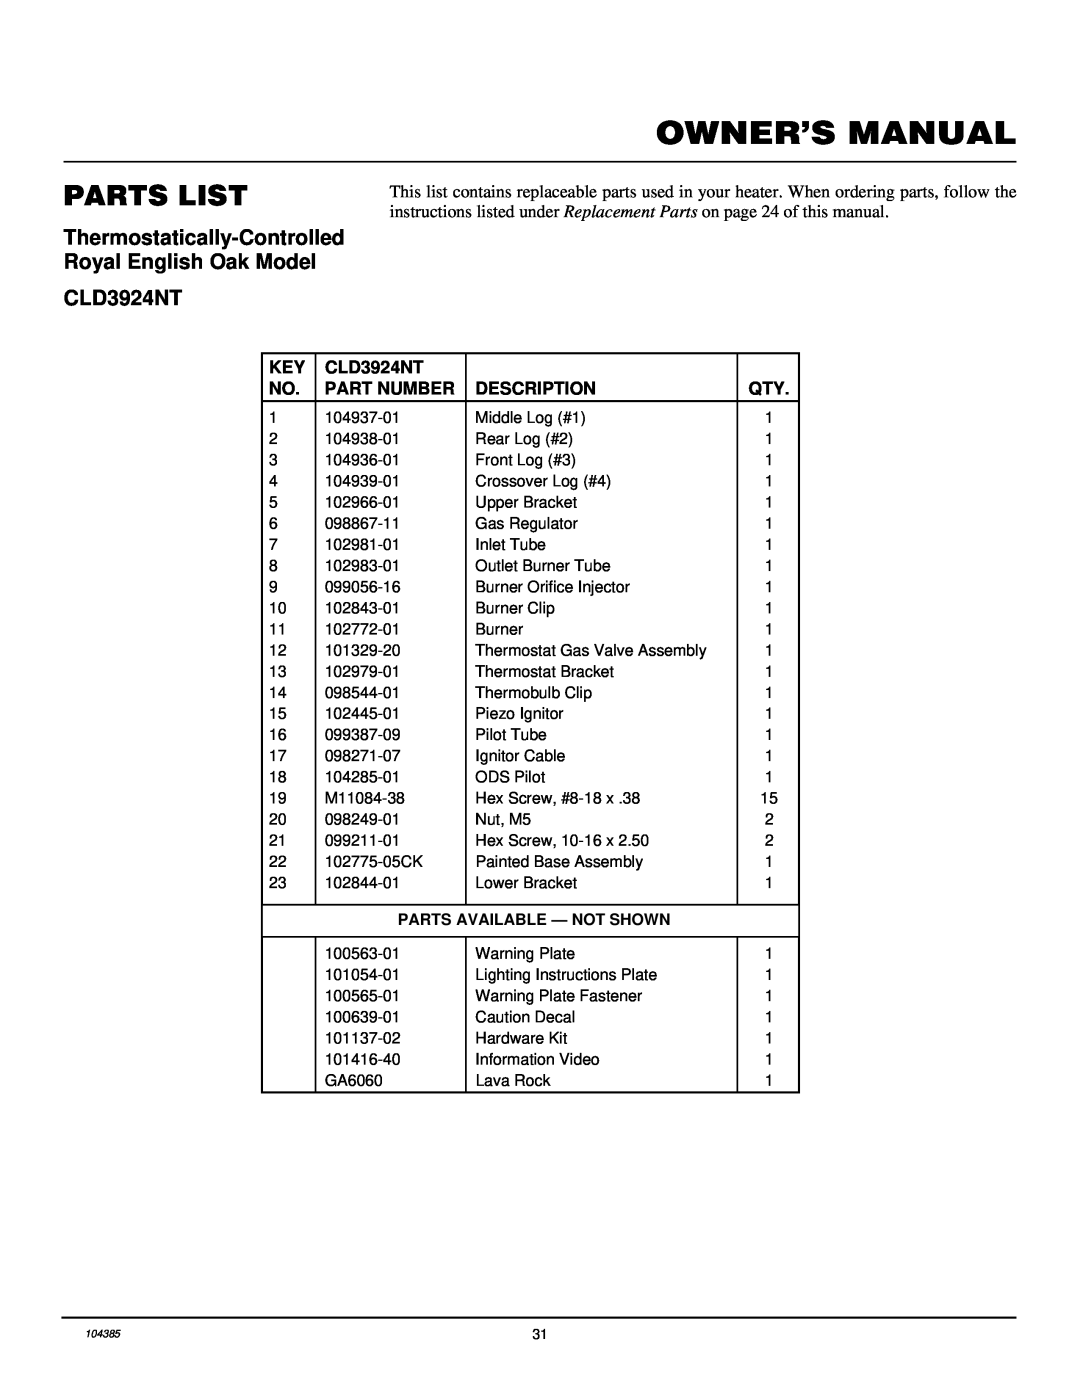 Desa CLD3924NT, CLD3018N, CCL3930NT(A) installation manual Parts List, Part Number, Description, Parts Available - Not Shown 